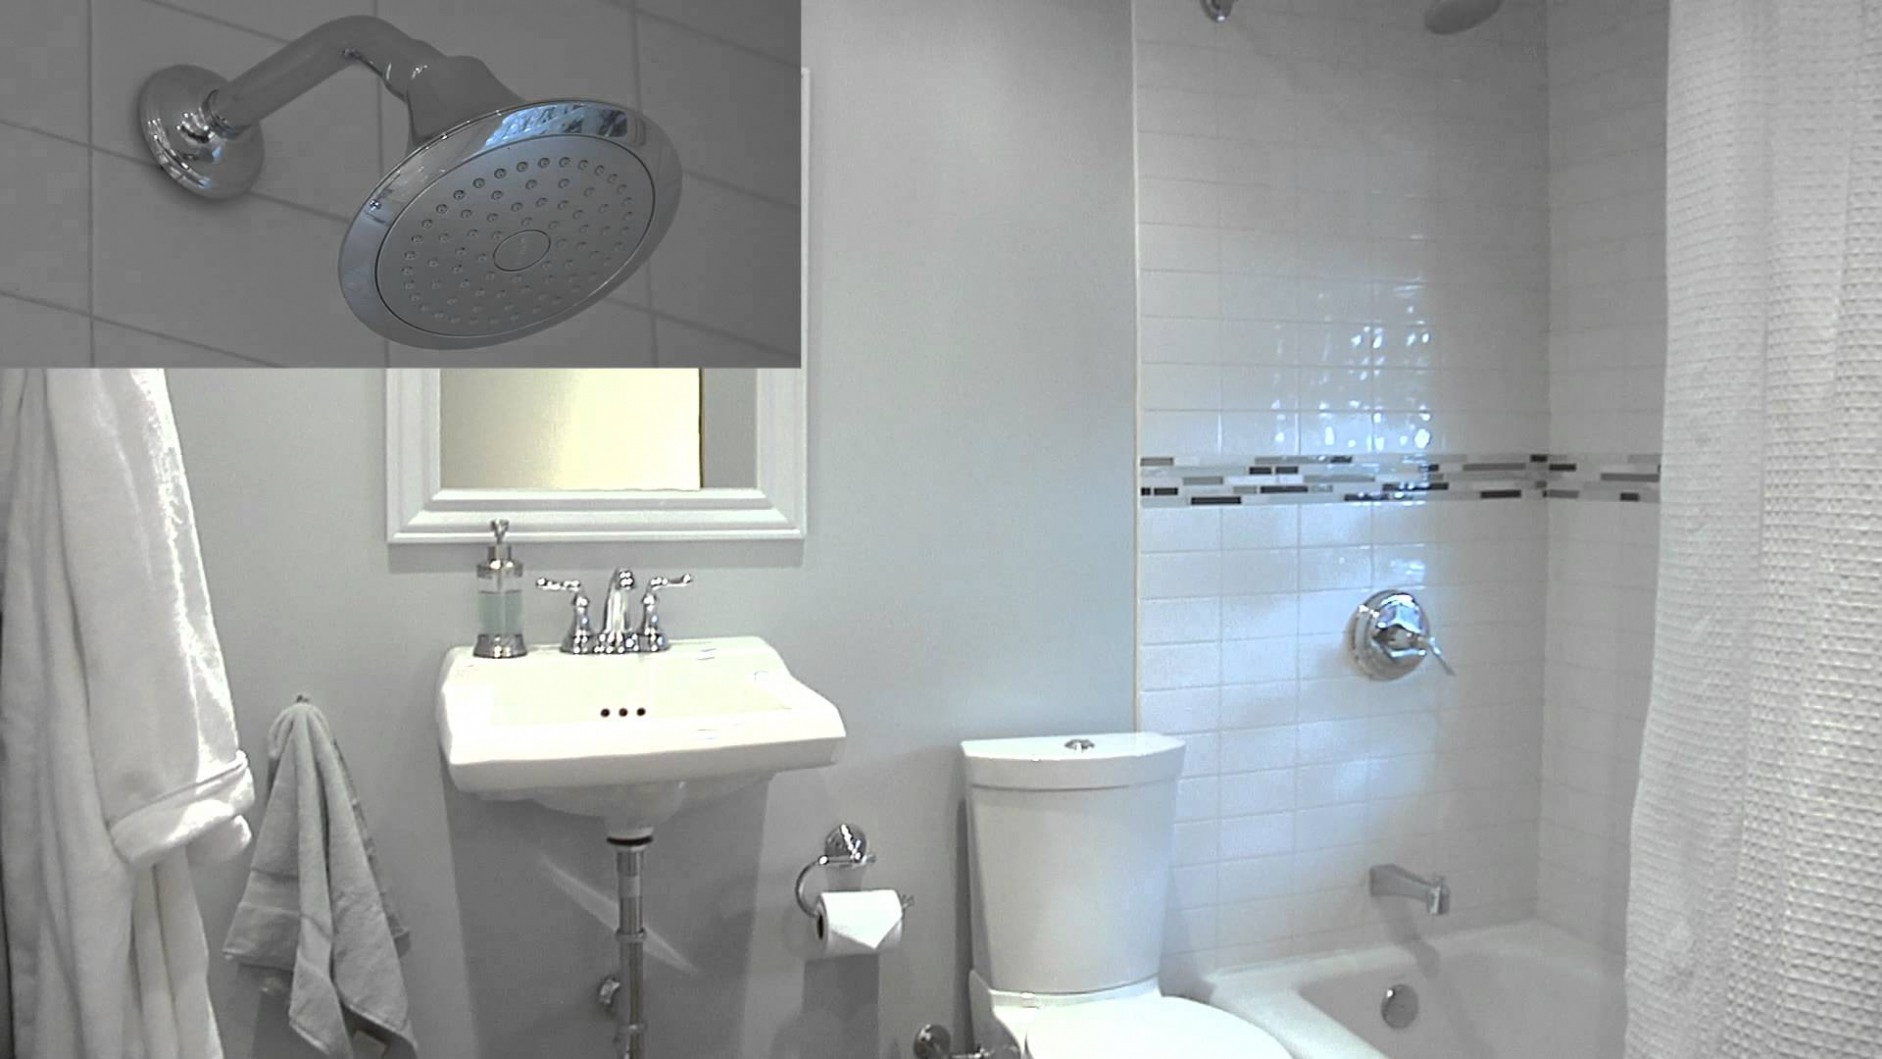 Lowes Bathroom Design Ideas
 Beautiful Lowes Bathroom Remodel Ideas Gallery Bathroom